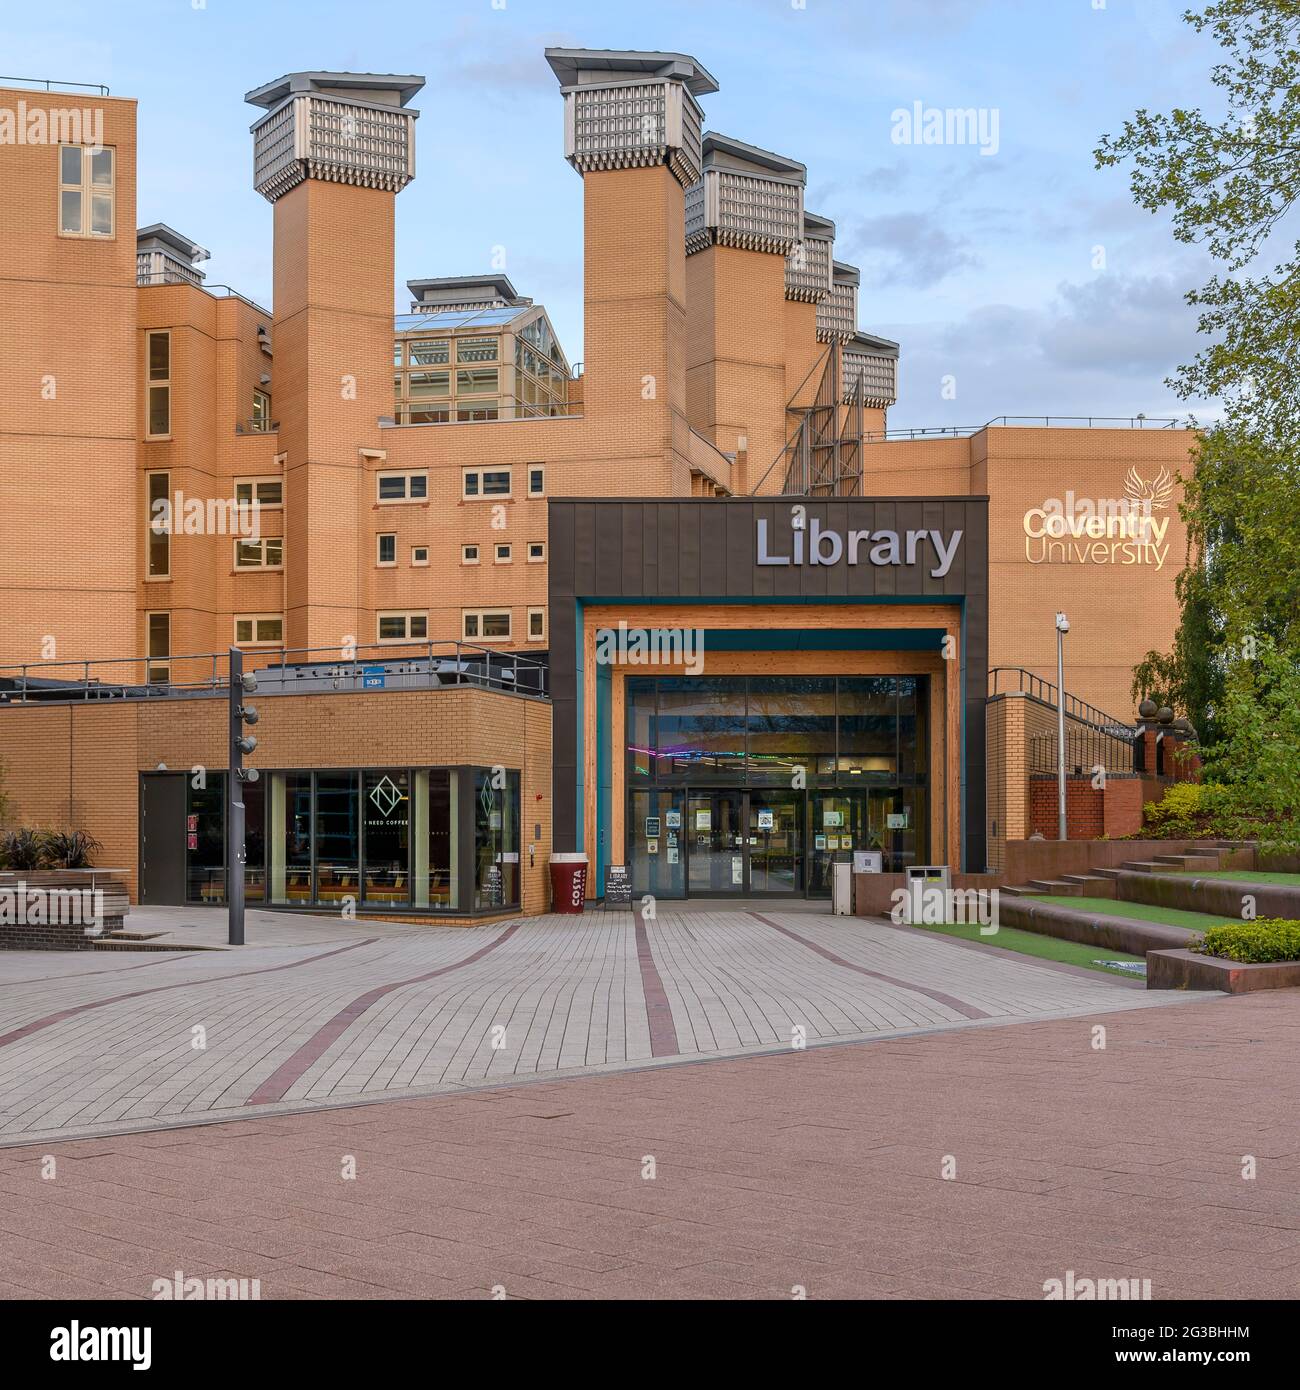 Lanchester Library im Frederick Lanchester Gebäude der Coventry University. Erbaut vom Architekten Professor Alan Short of Short and Associates. Stockfoto